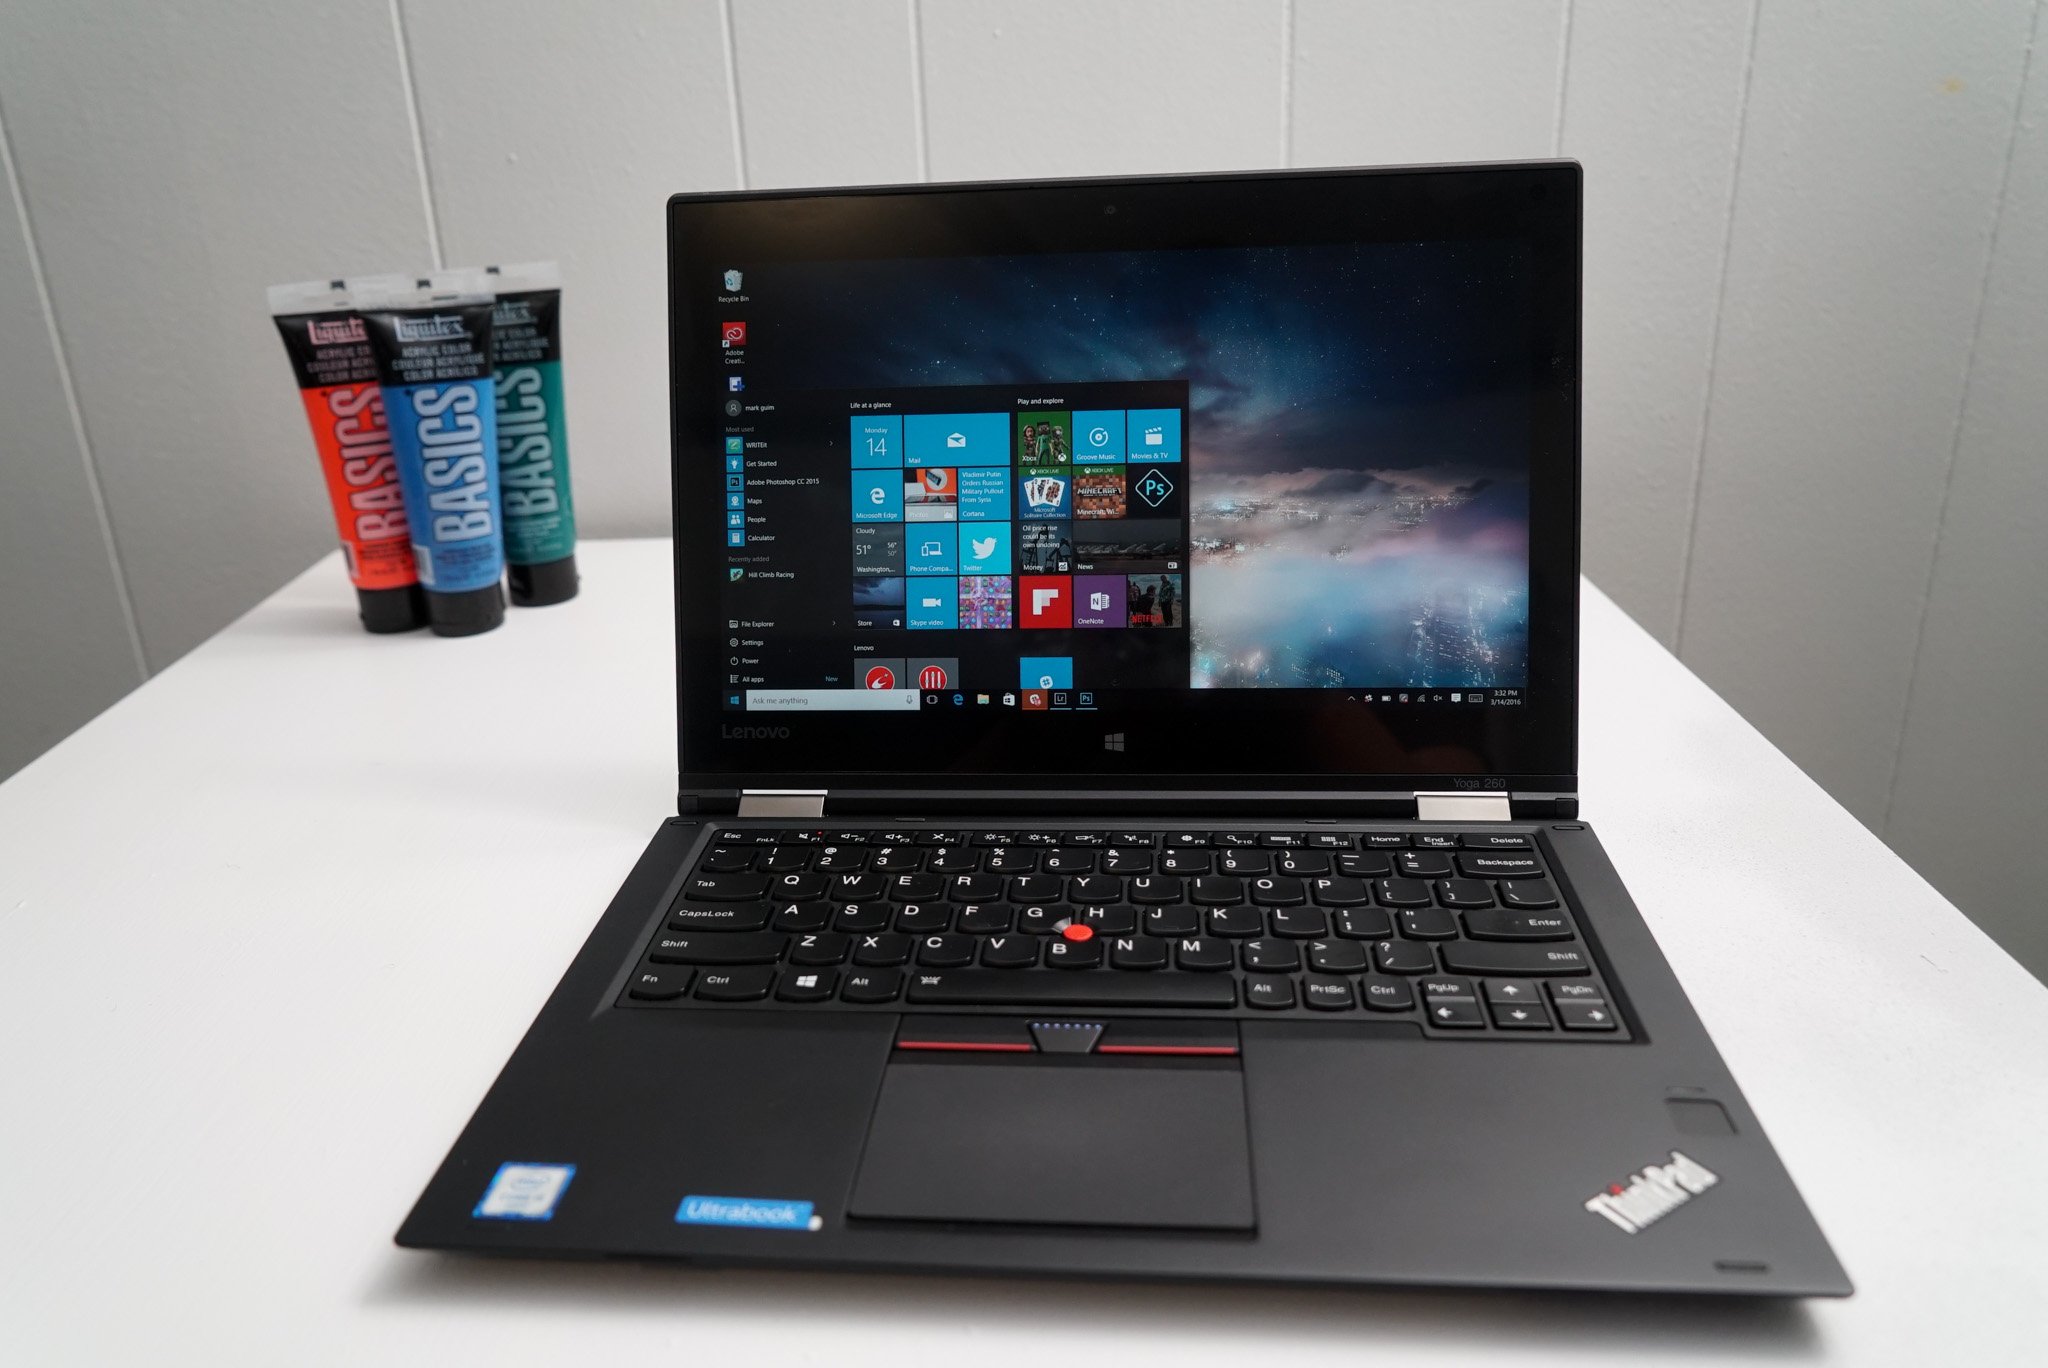 Lenovo ThinkPad Yoga 260 review: a flexible business laptop | Windows Central